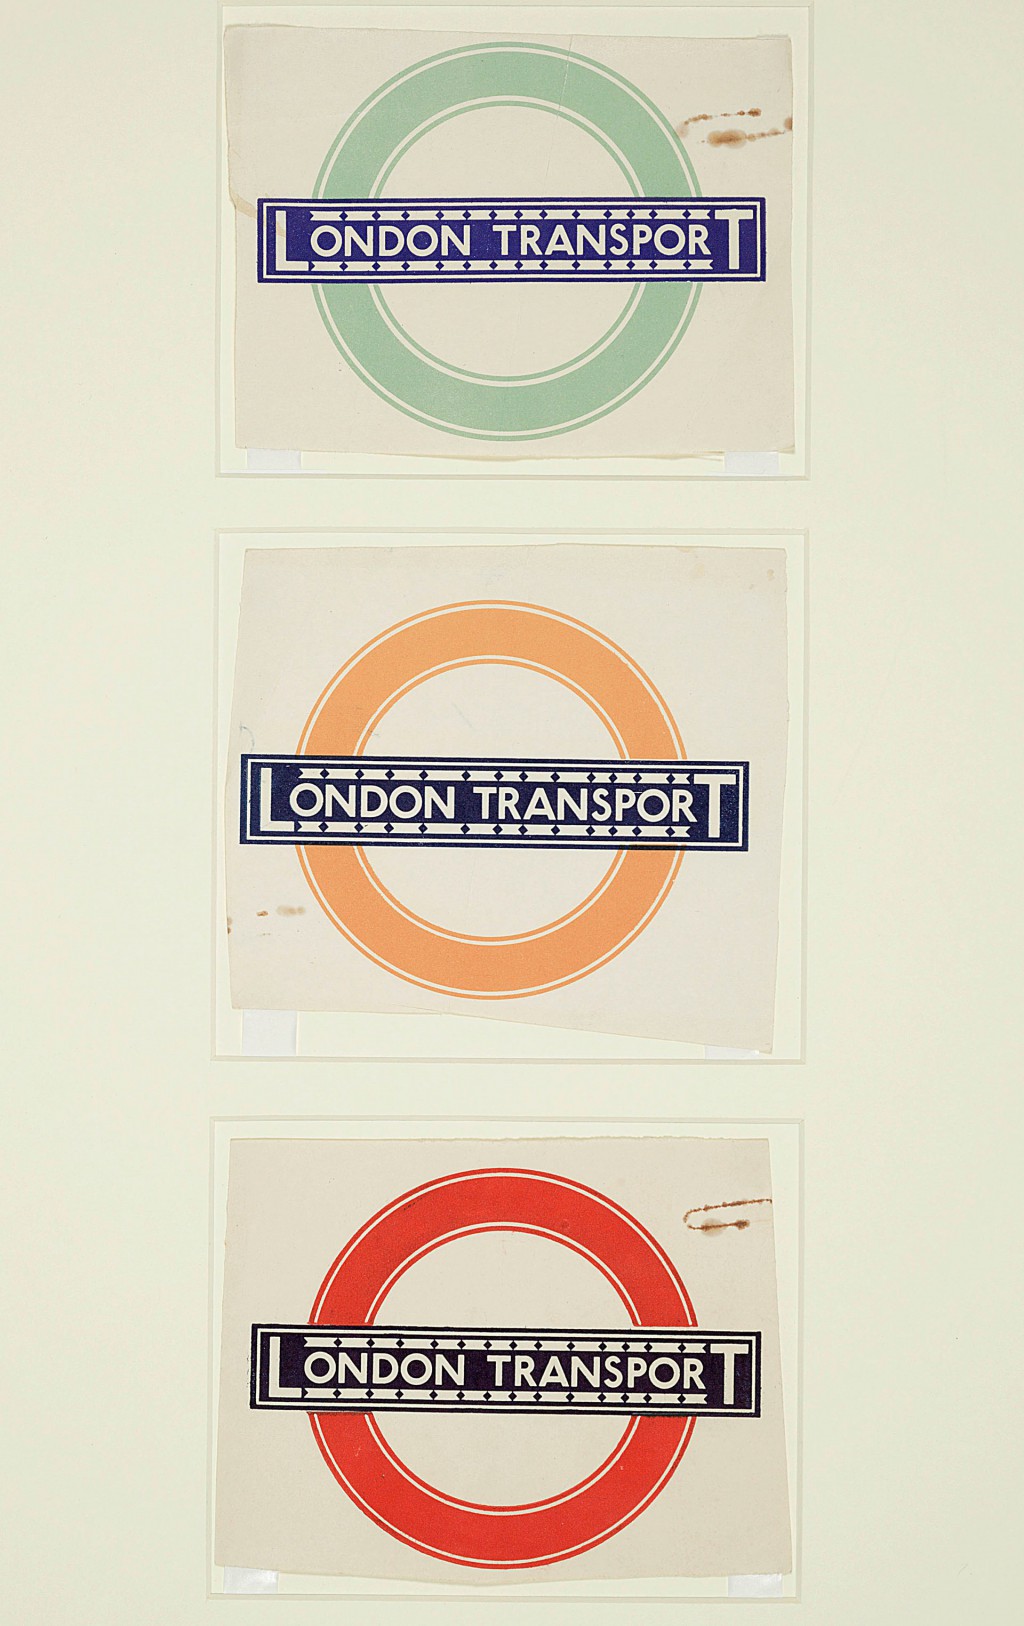 London Underground typeface celebrates its 100th anniversary